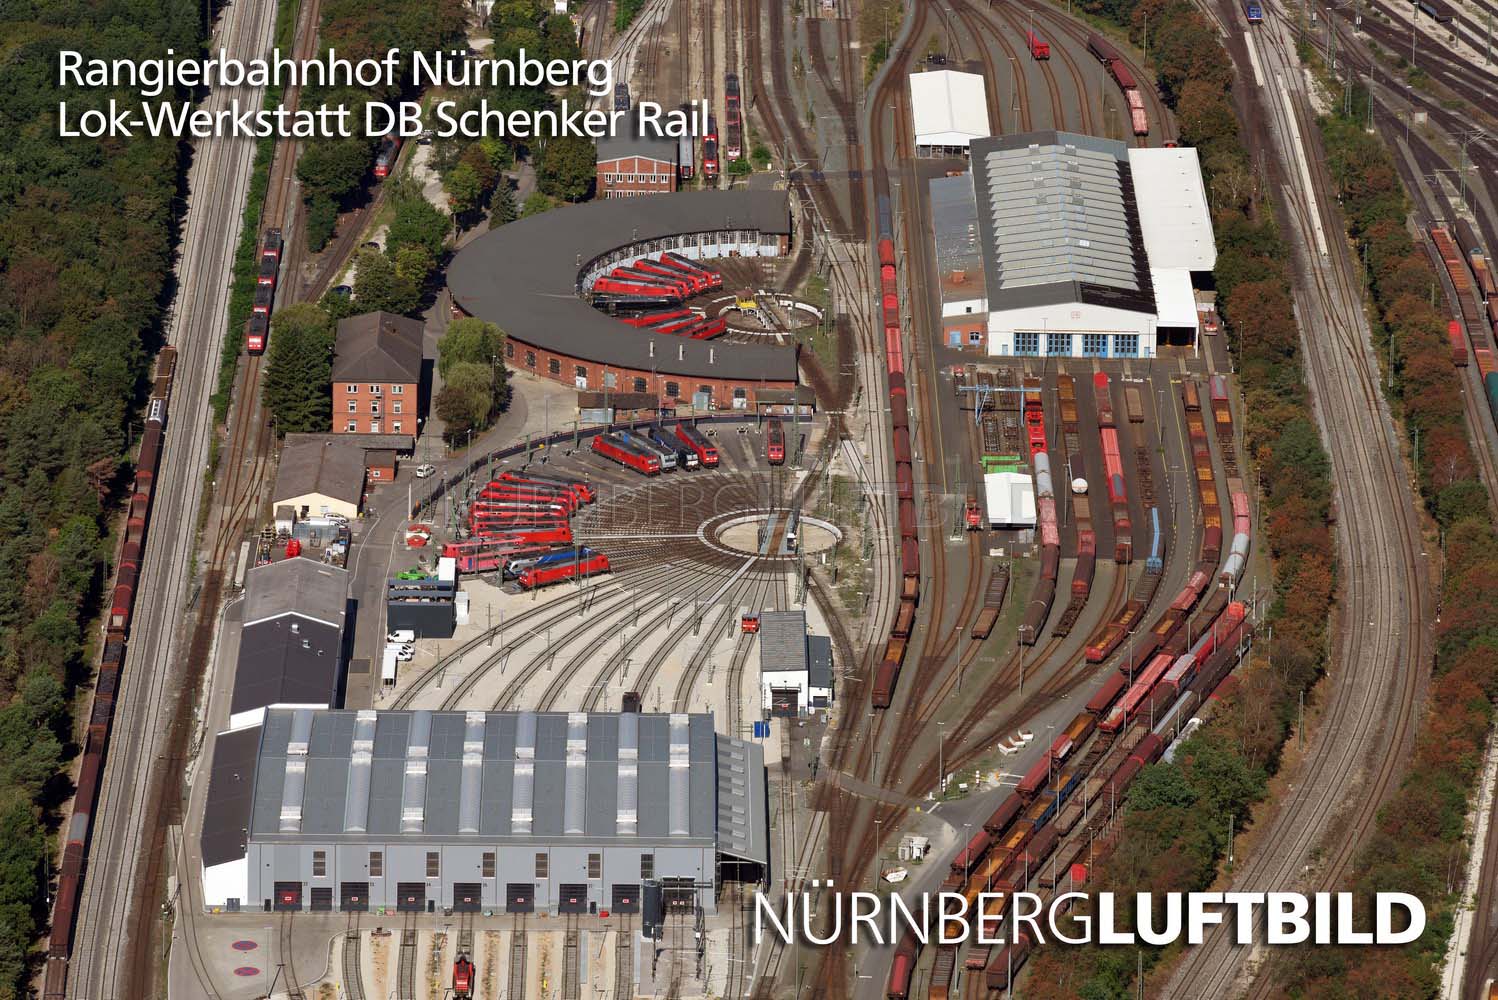 Rangierbahnhof Nürnberg, Lok-Werkstadtt DB, Luftbild